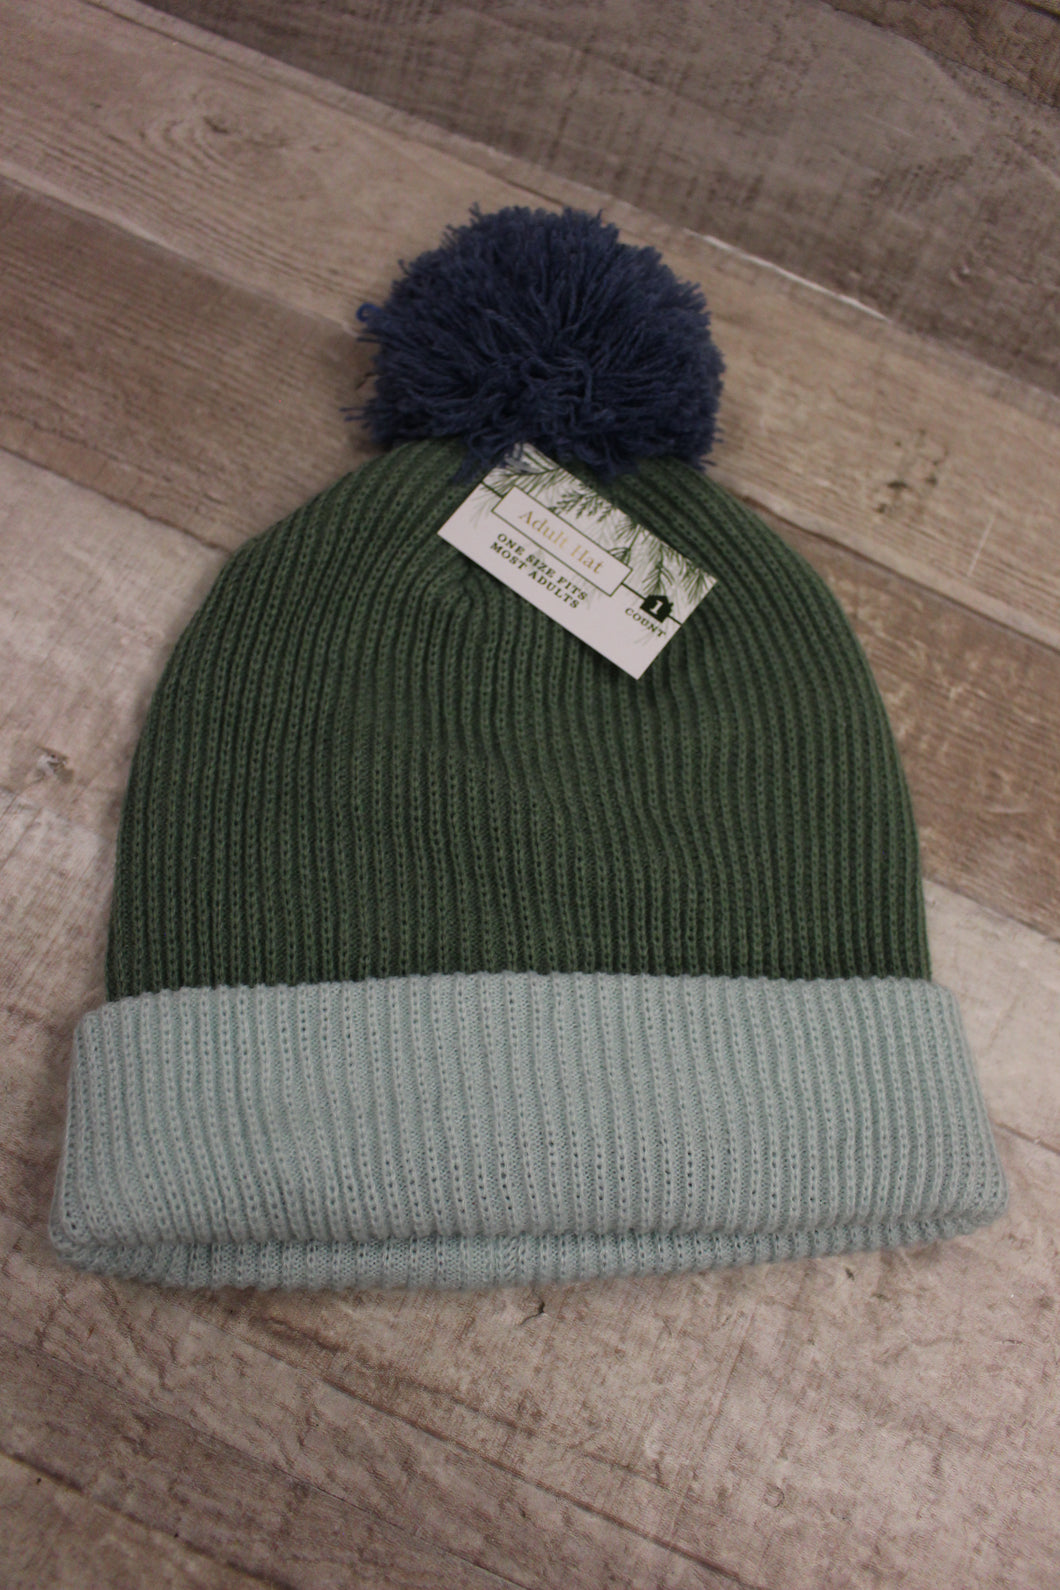 Adult Winter Beanie Hat -Green -New